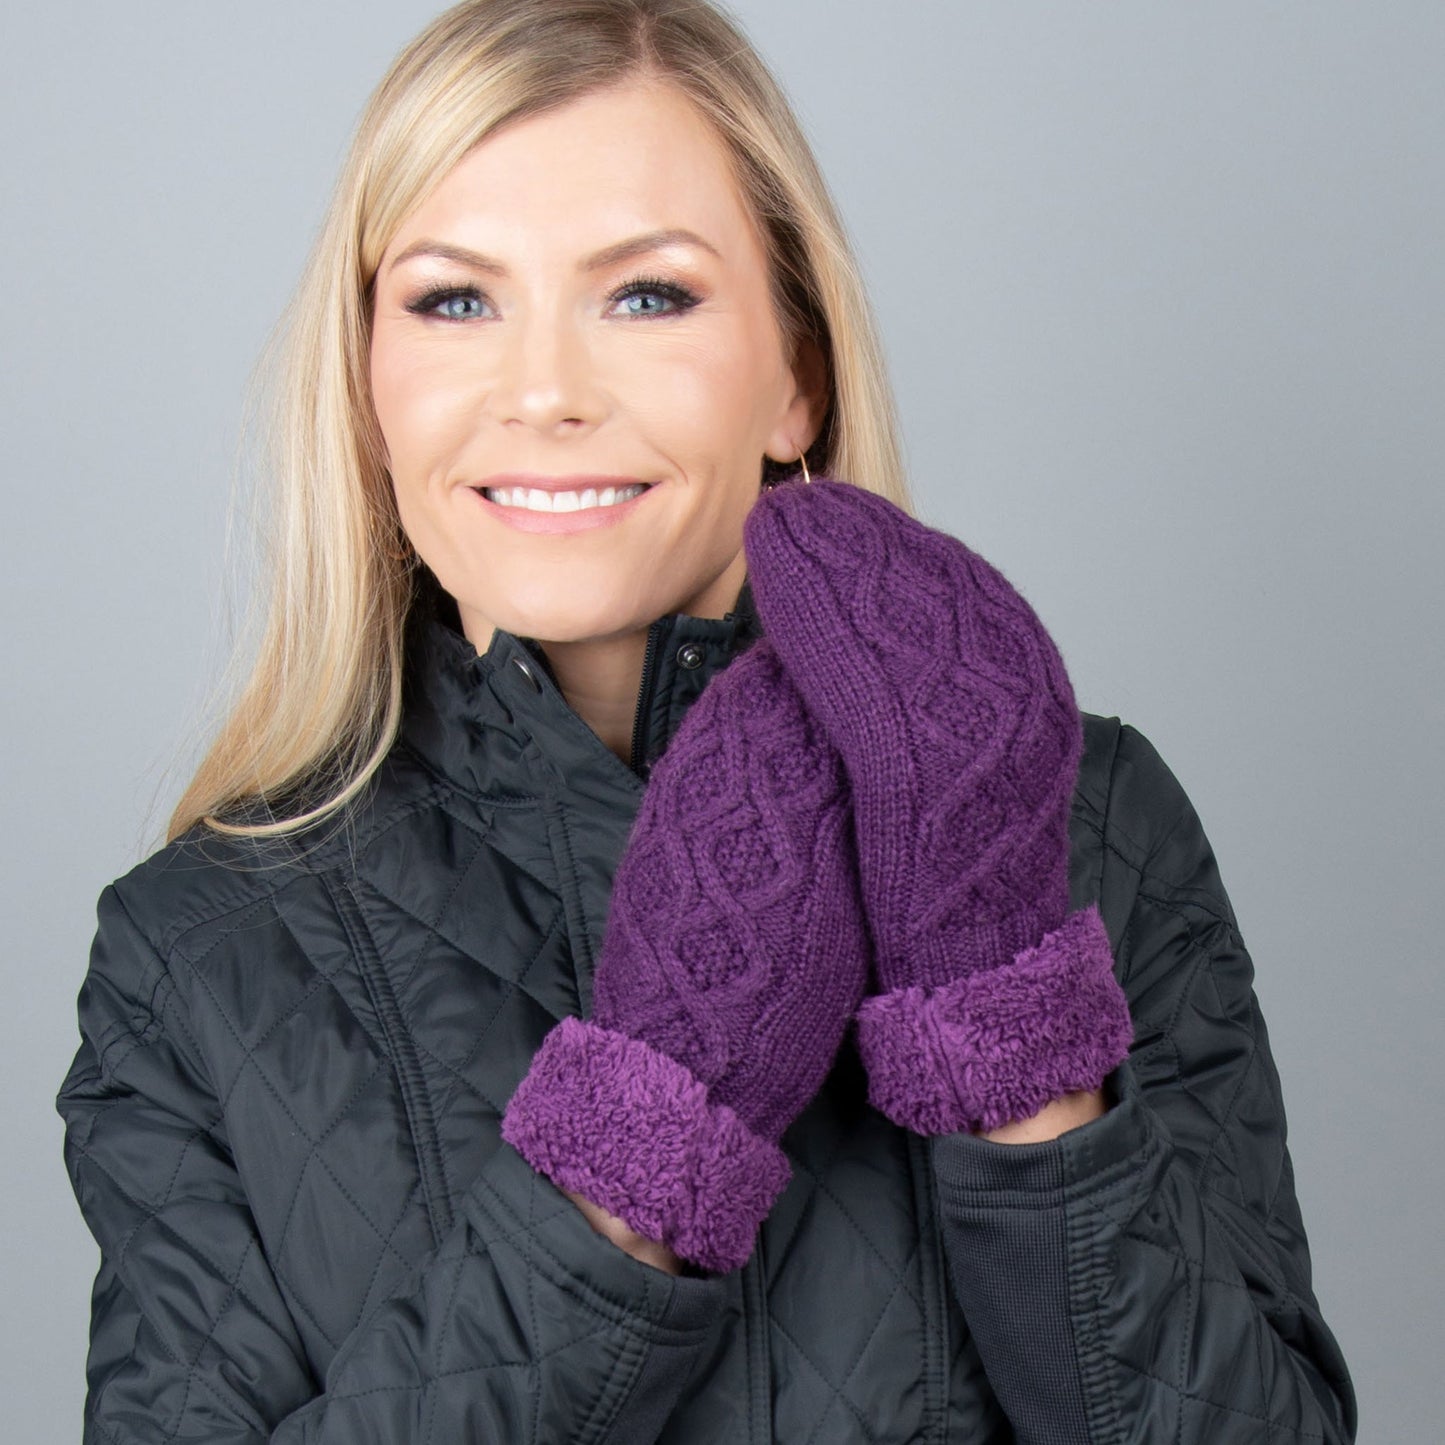 Howard's Women's Winter Brittin Knit Sherpa Cuff Mittens